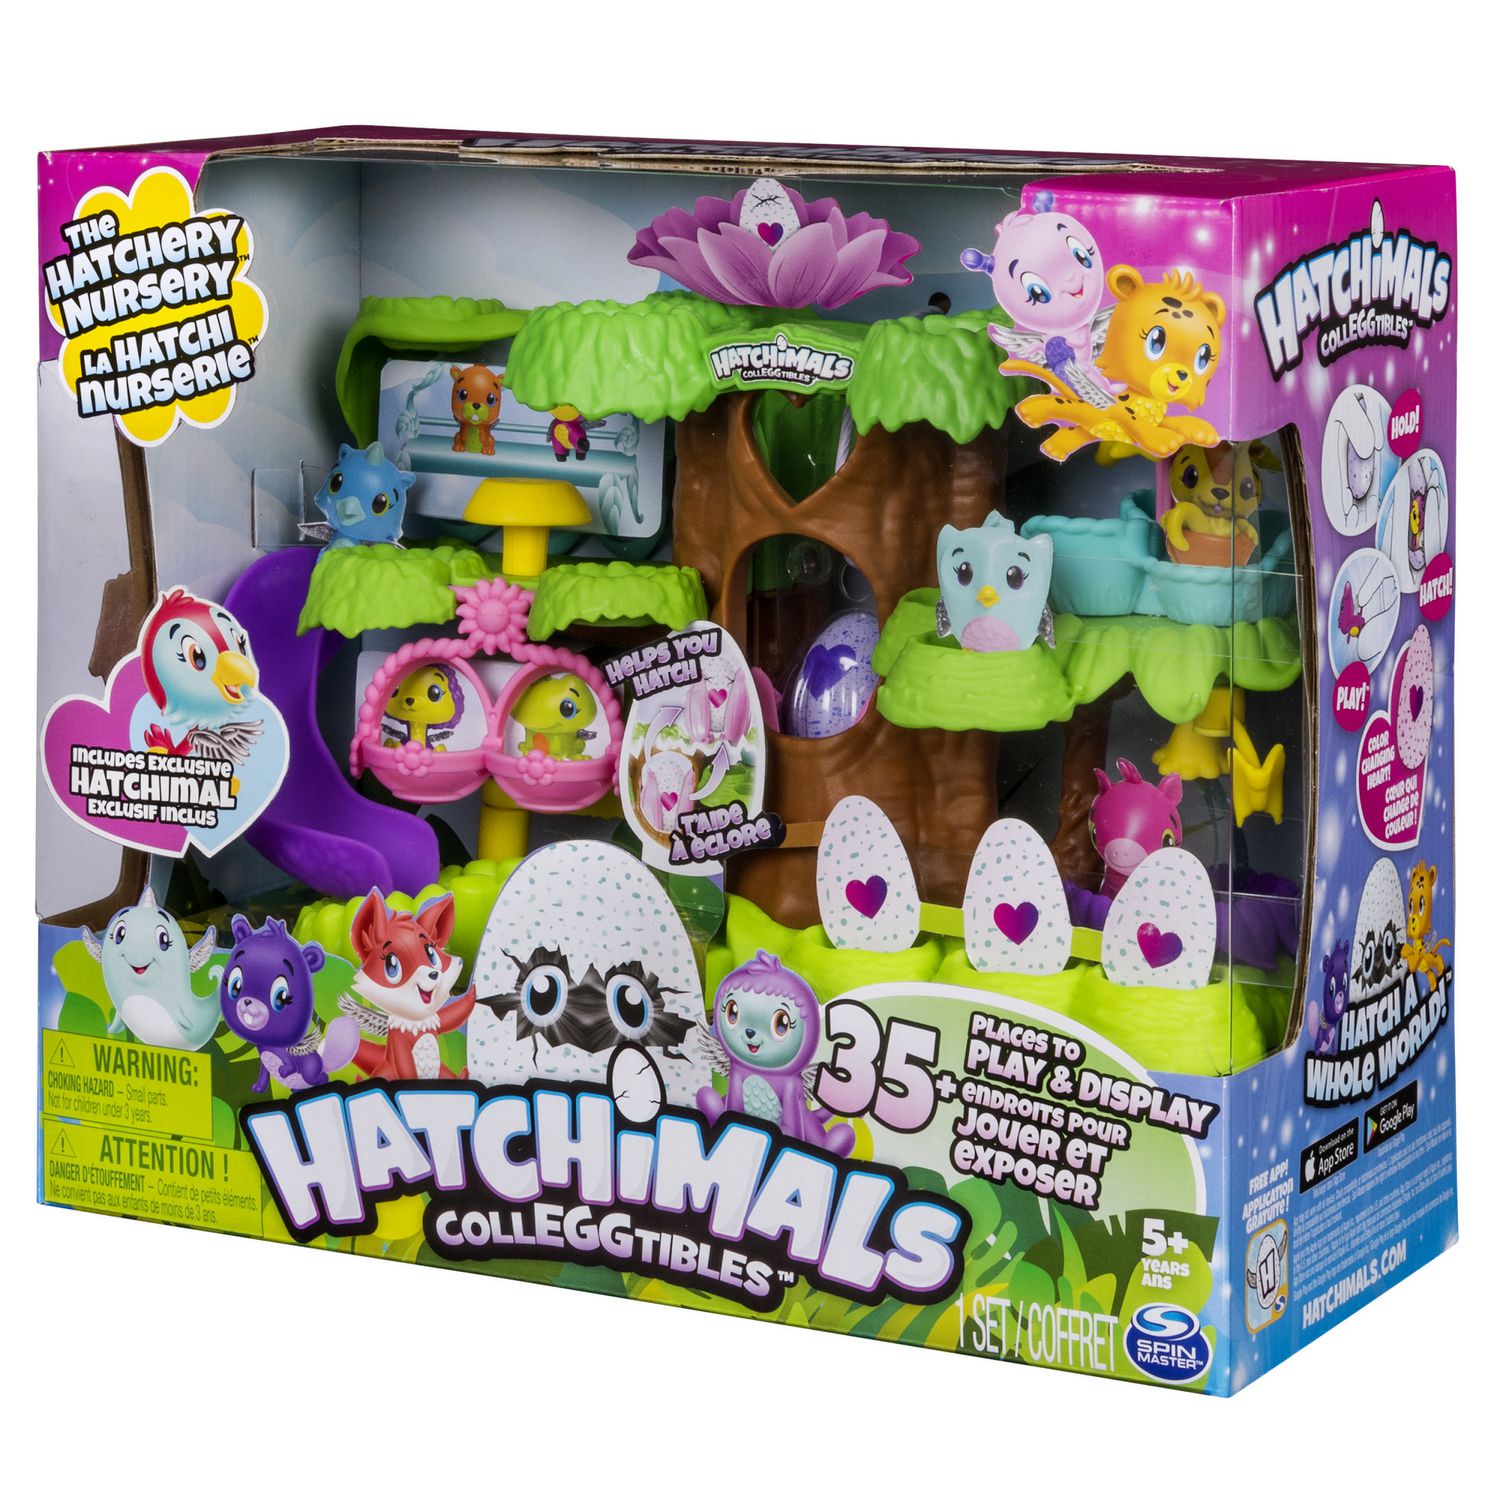 Hatchimals – Hatchery Nursery Playset with Exclusive Hatchimals